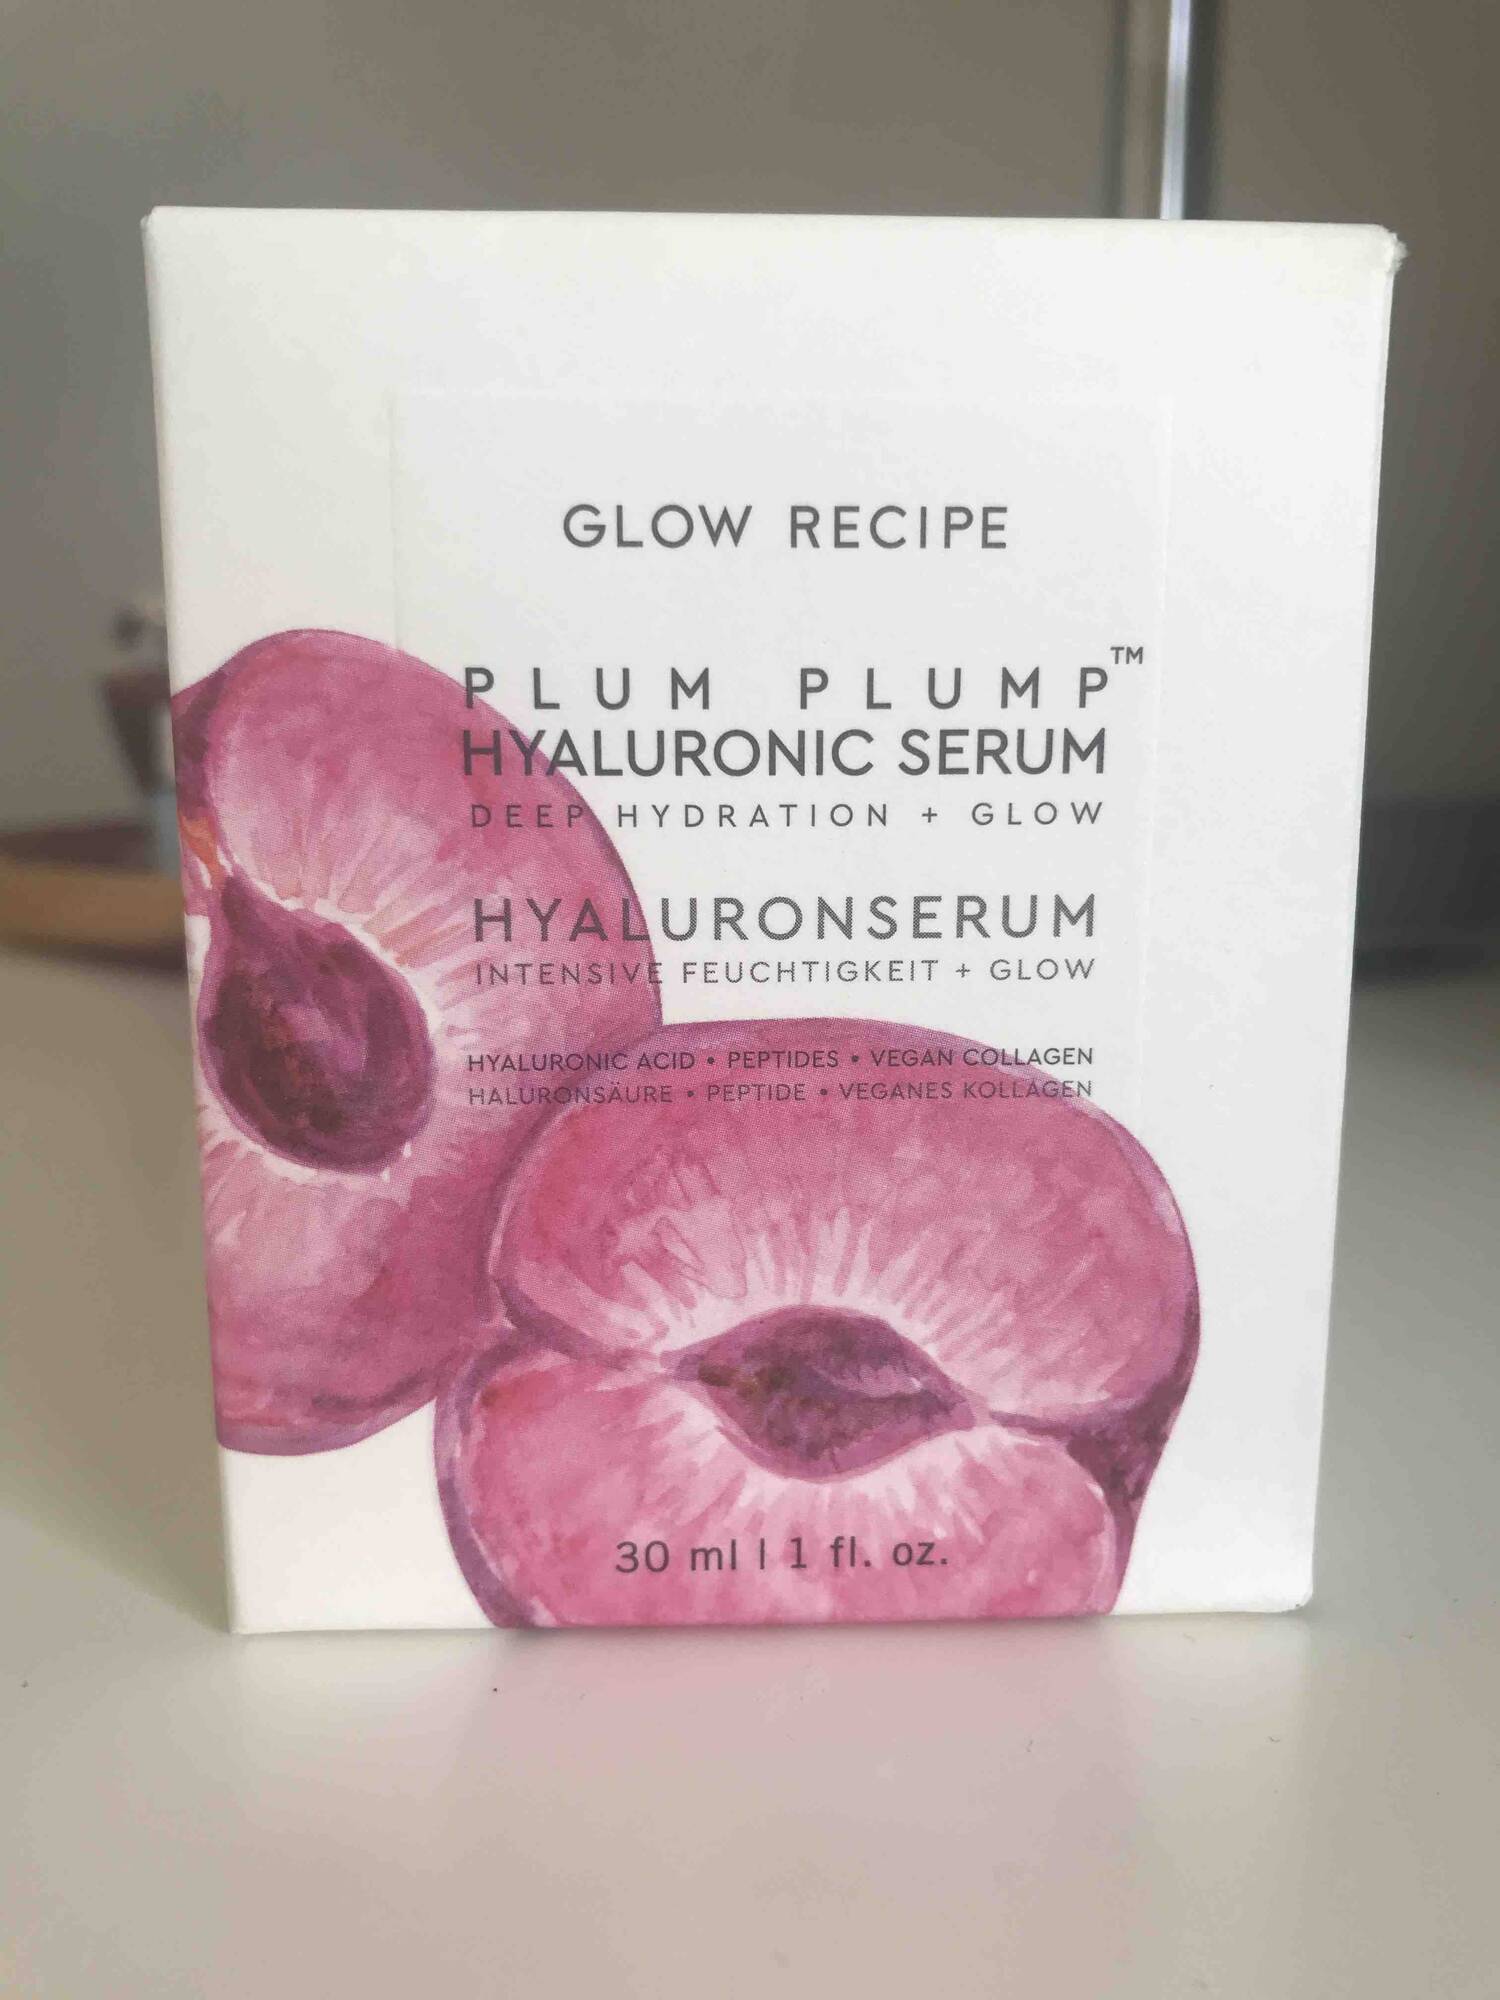 GLOW RECIPE - Plum plump - Hyaluronic serum